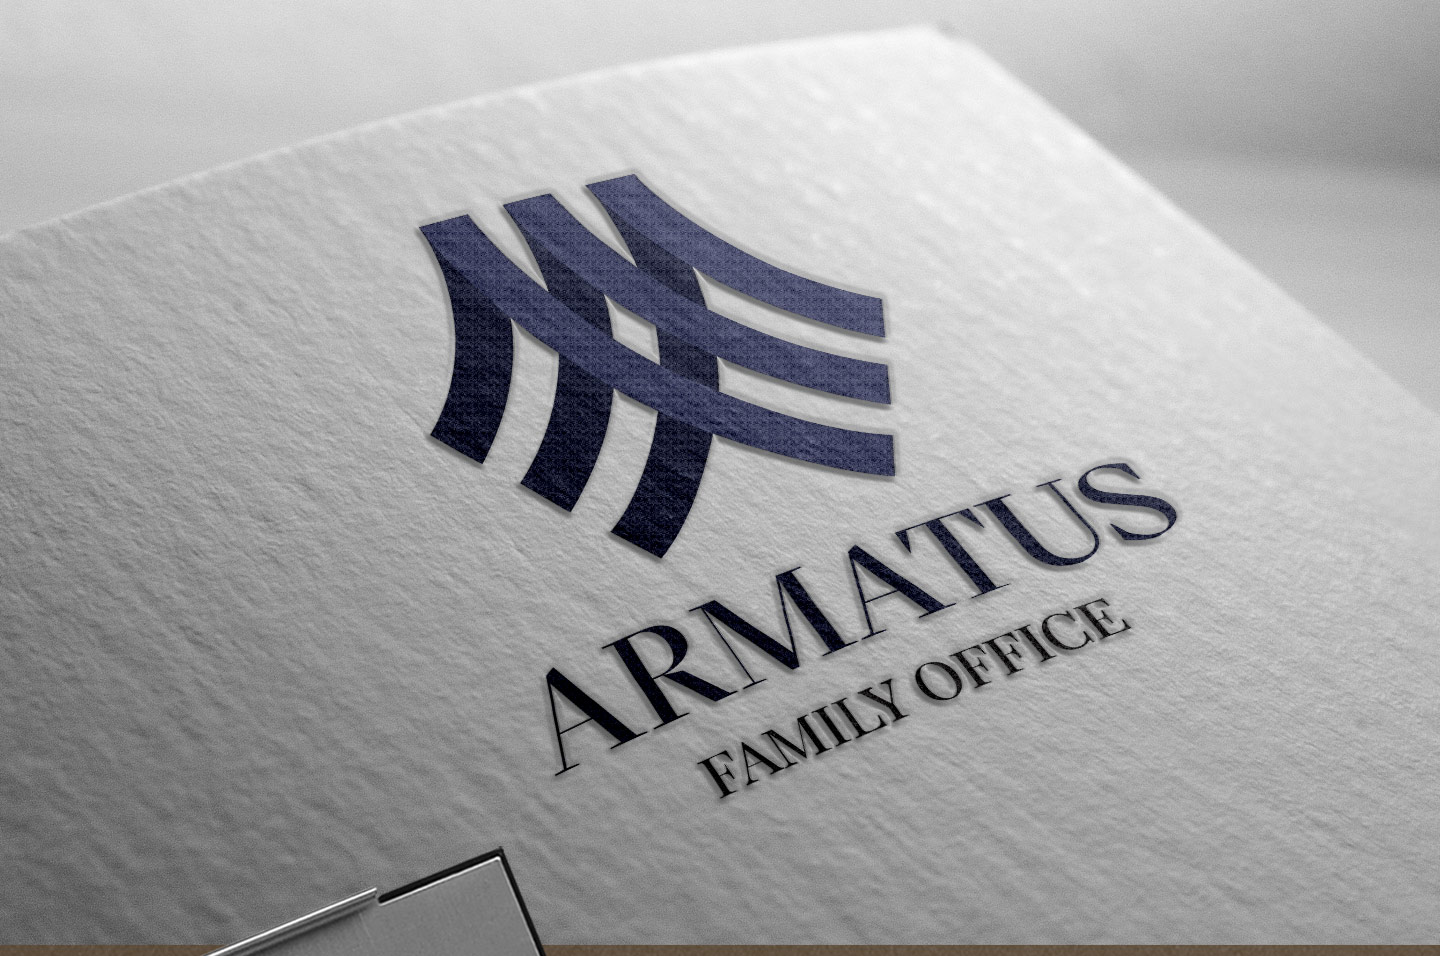 ARMATUS print presentation